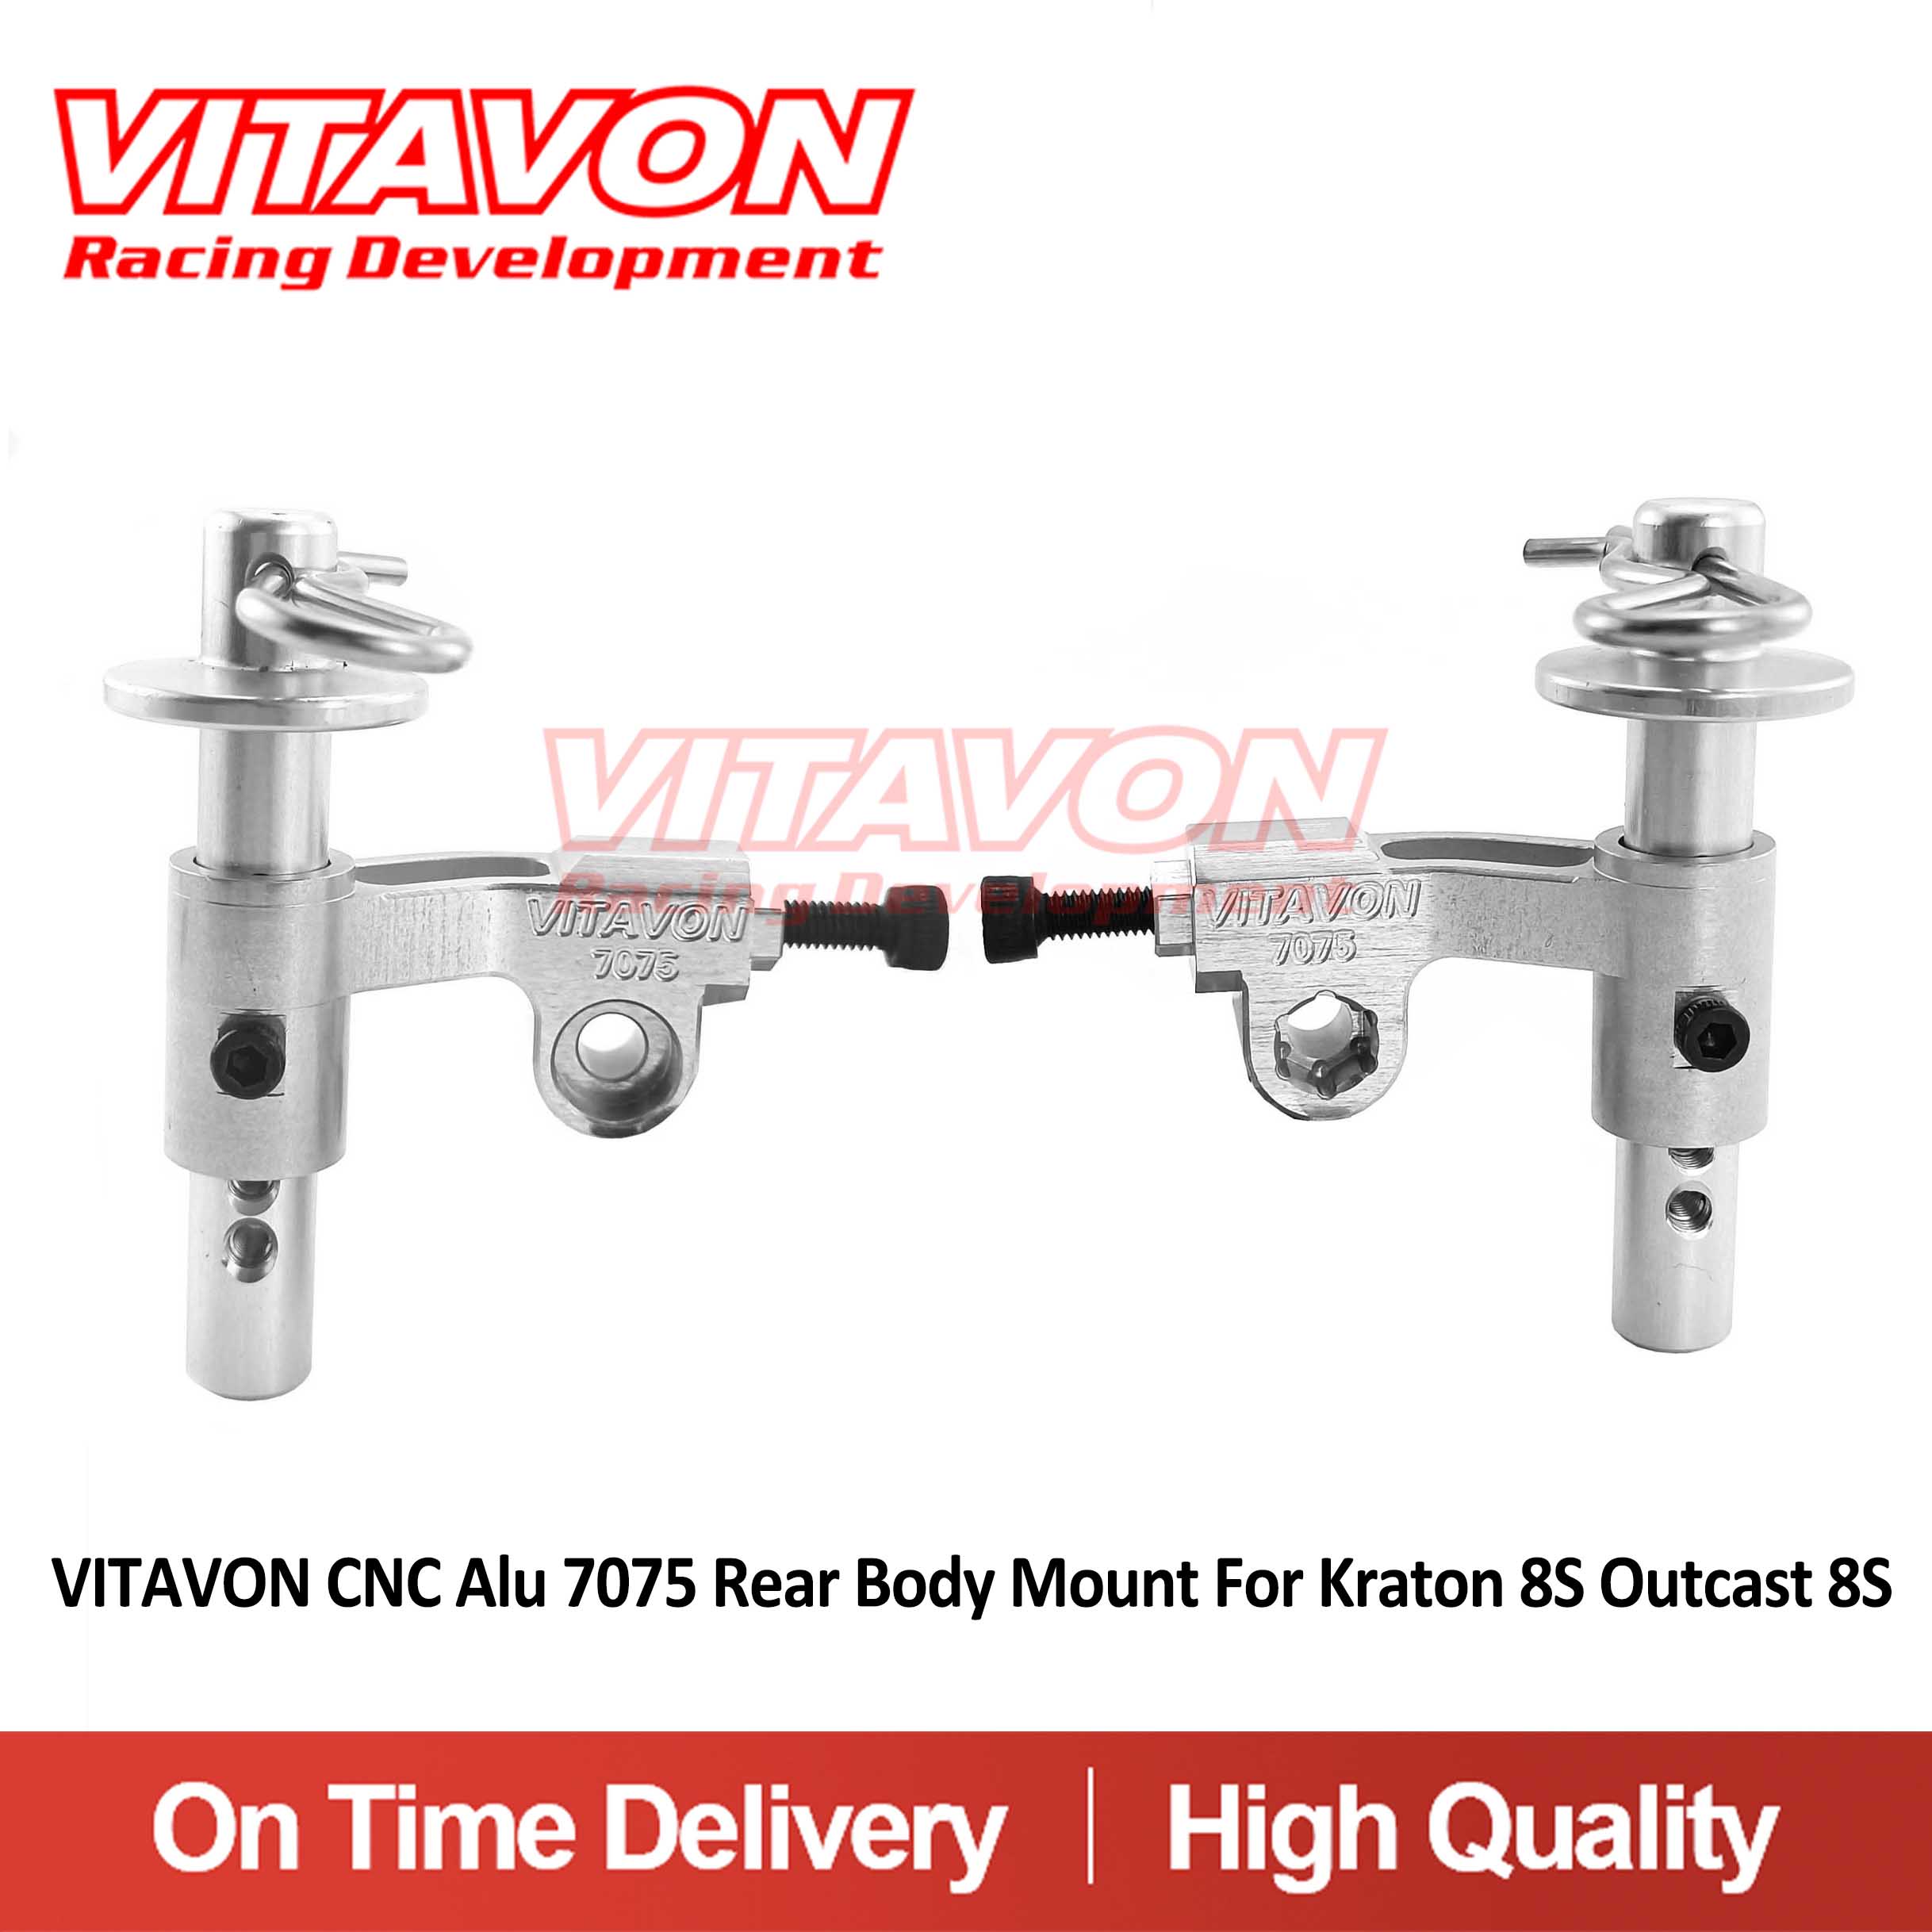 VITAVON CNC Alu 7075 Rear Body Mount For Kraton 8S Outcast 8S